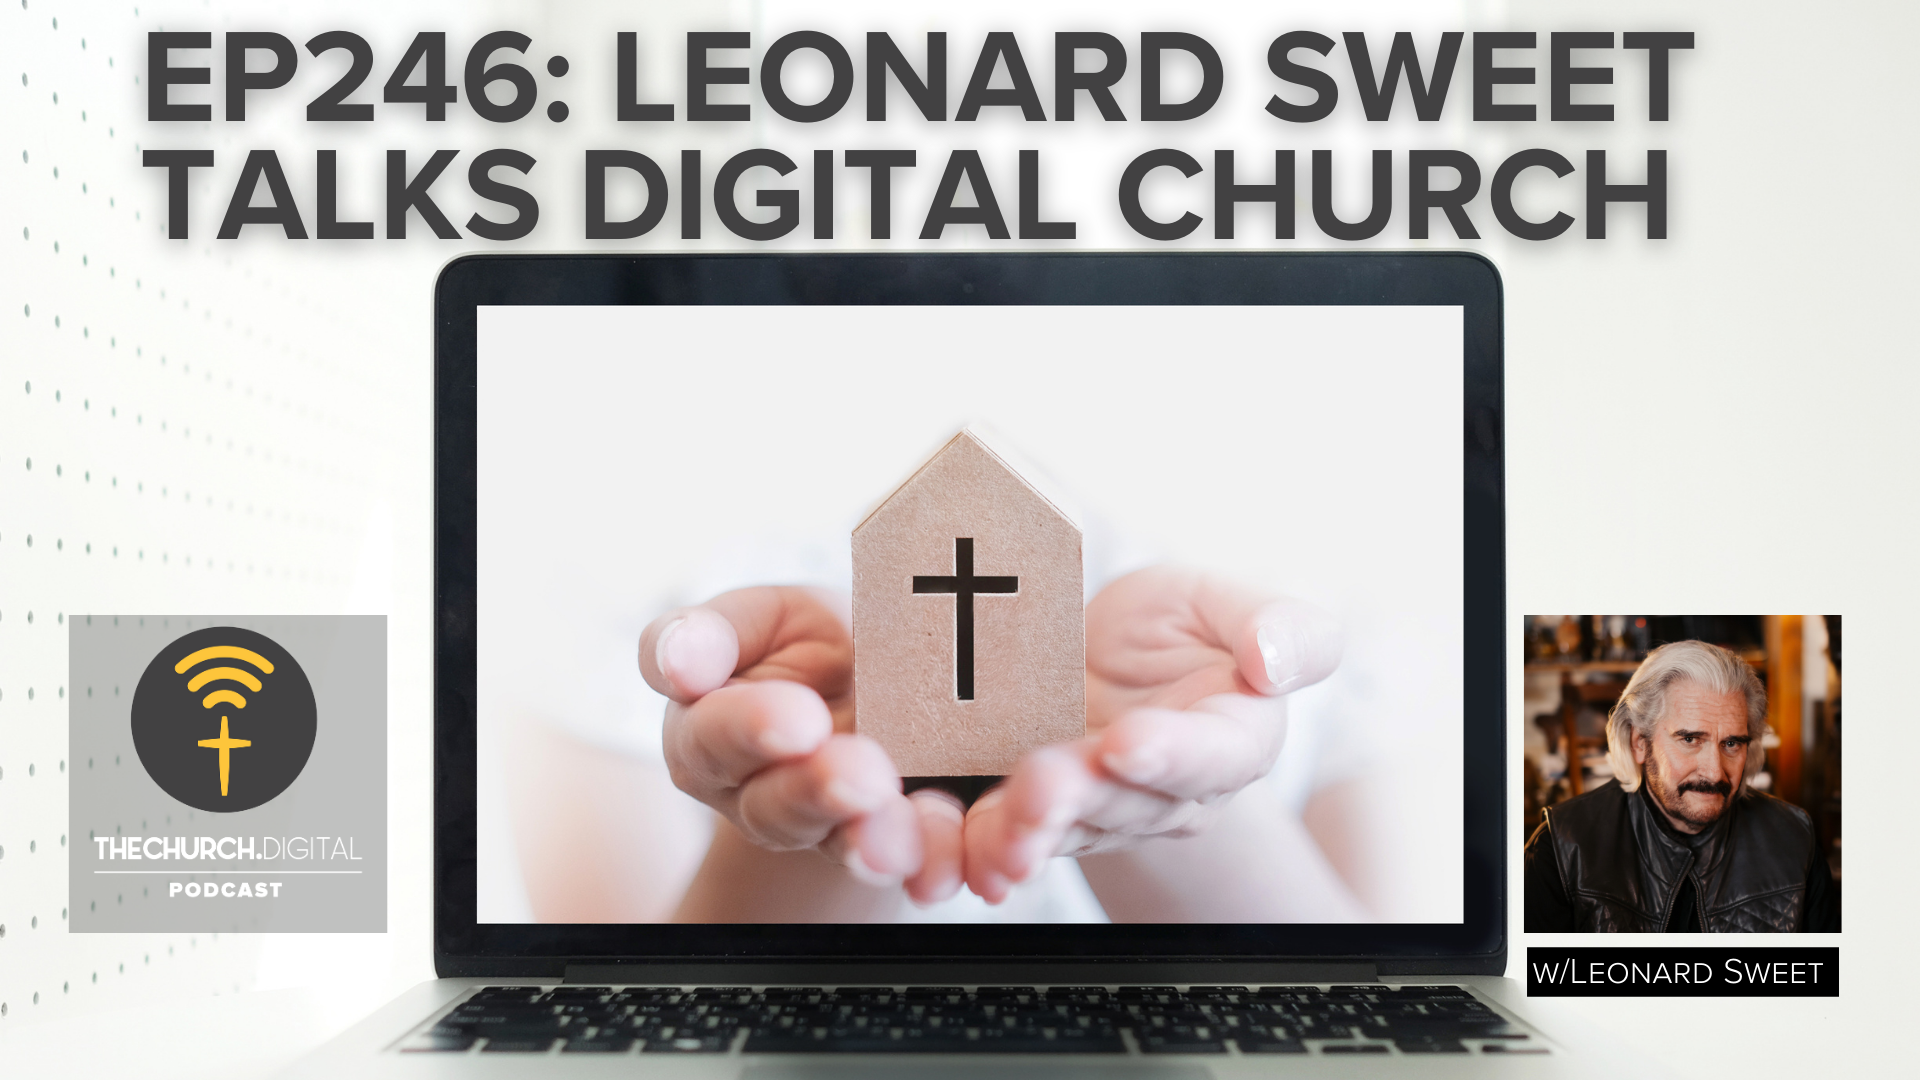 EP246 - Leonard Sweet talks Digital Church